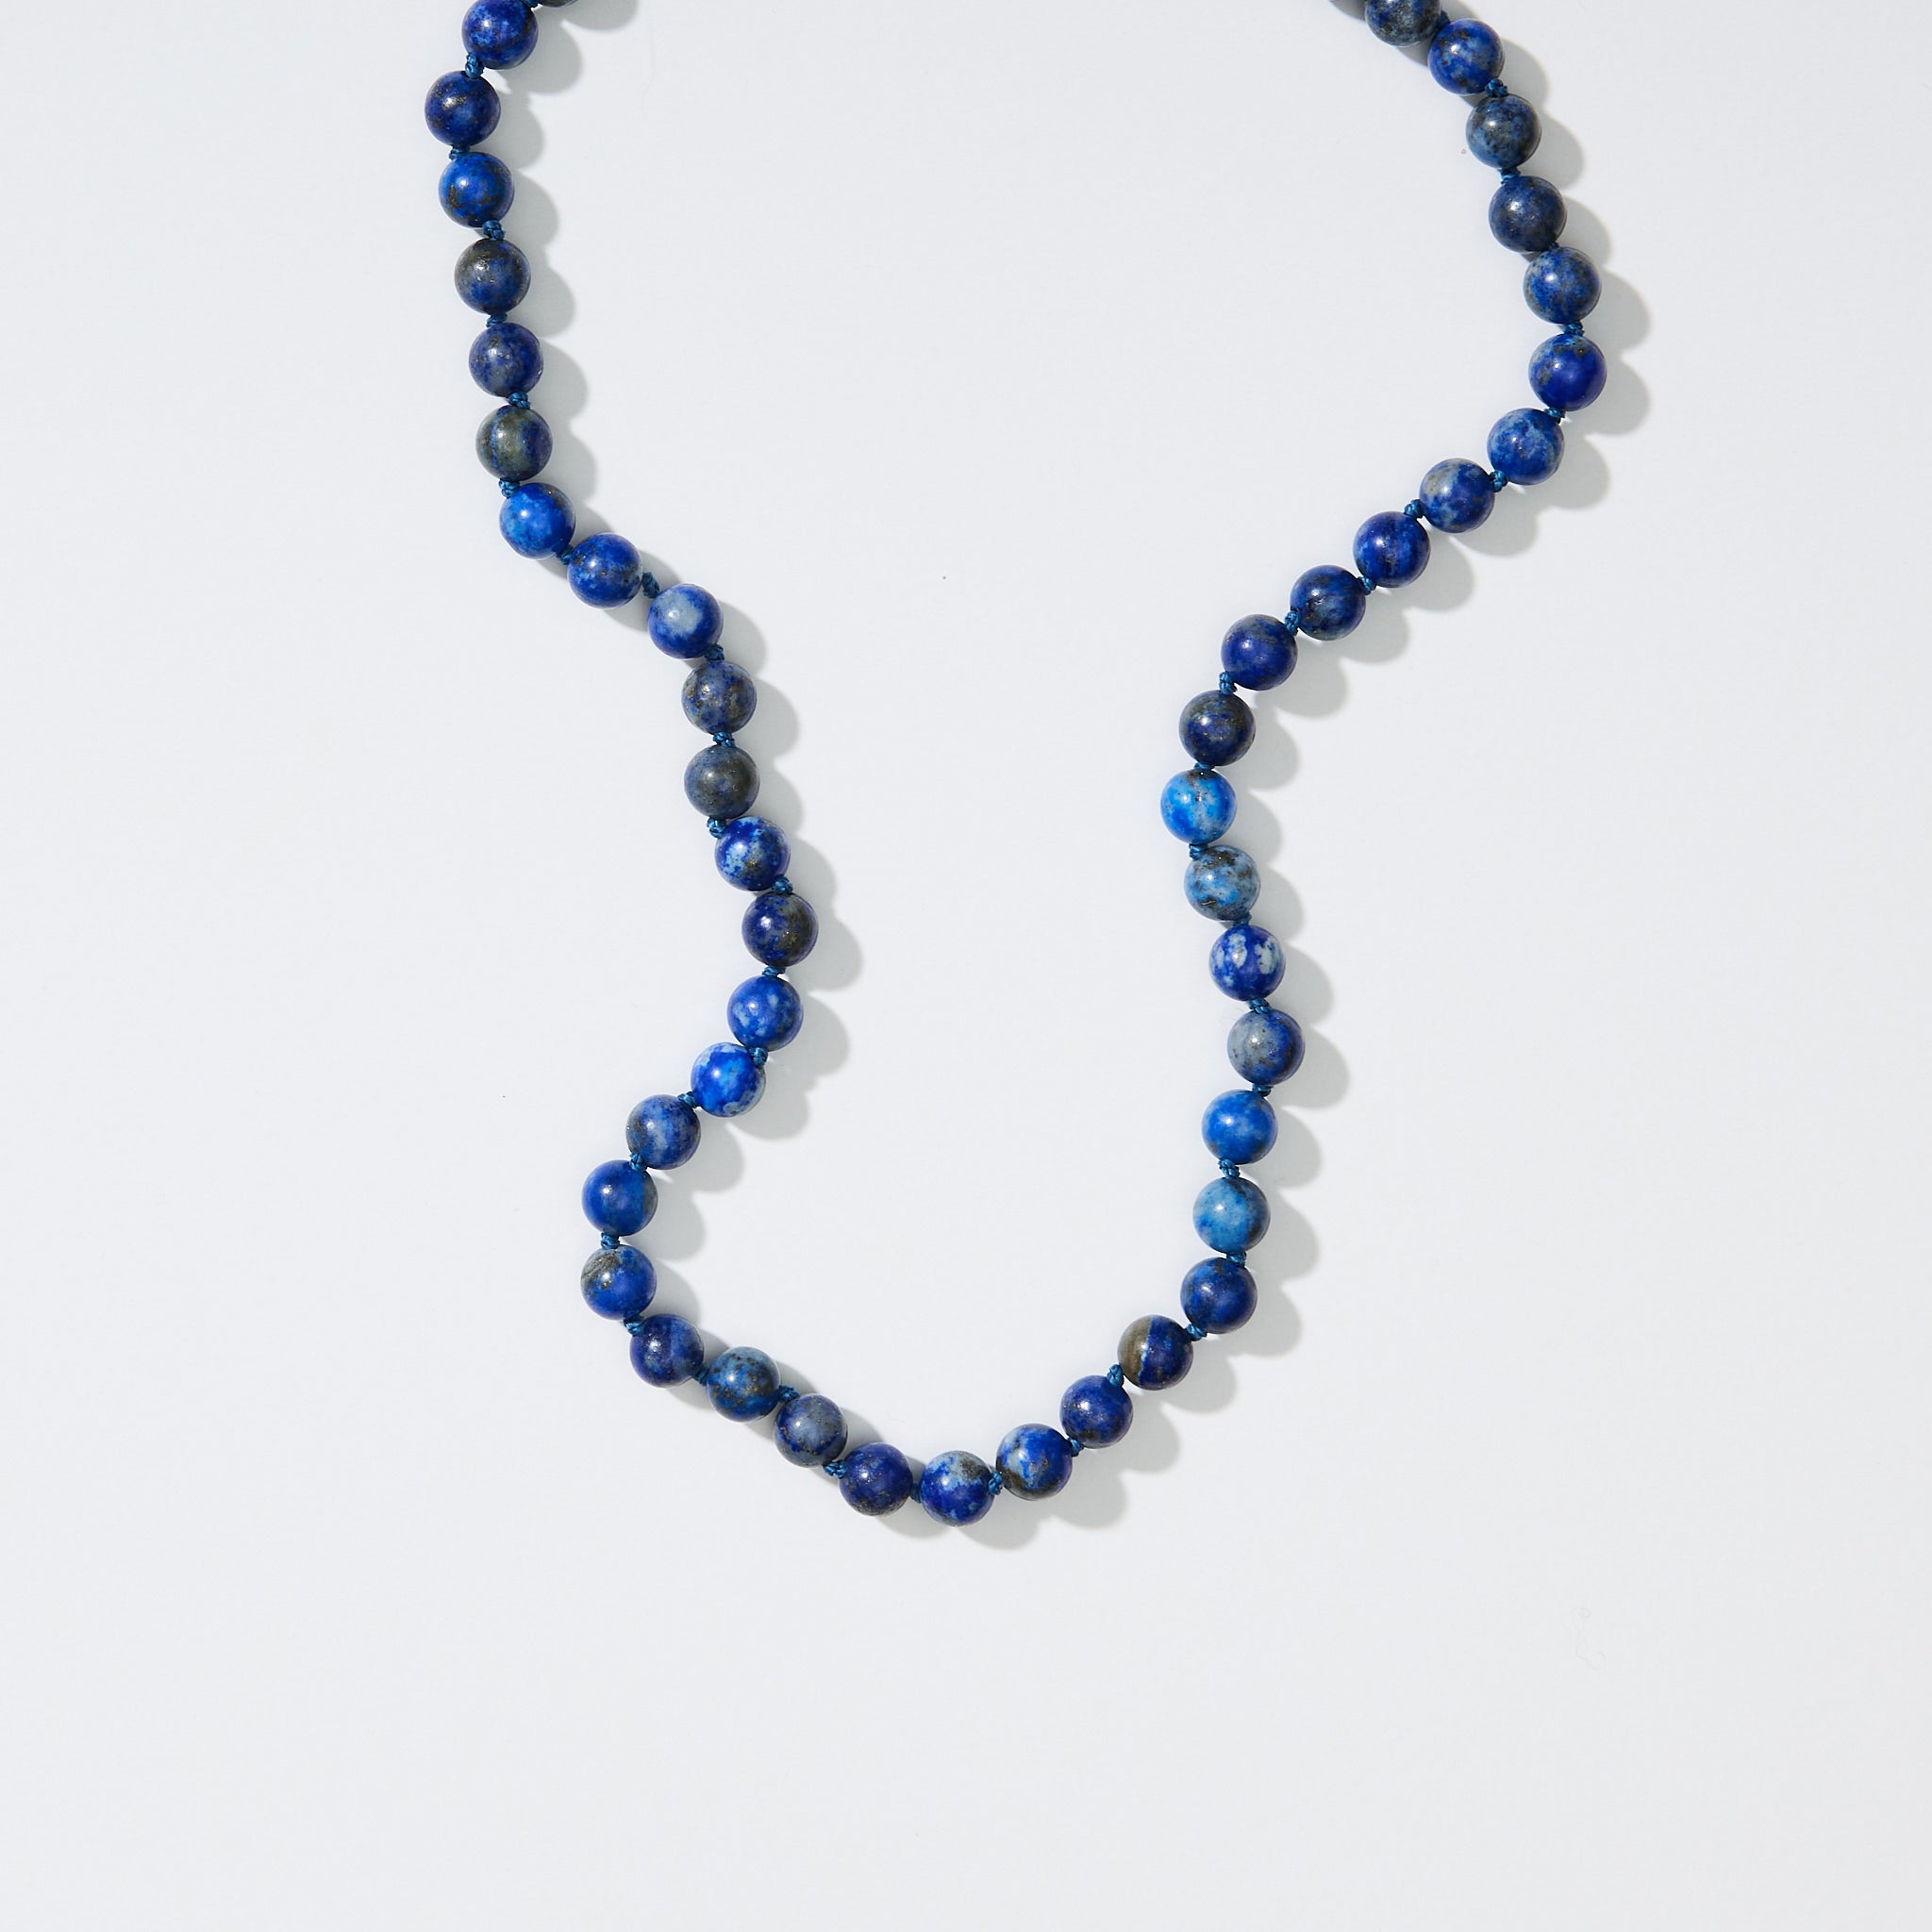 Lapis Lazuli - Adult Necklace